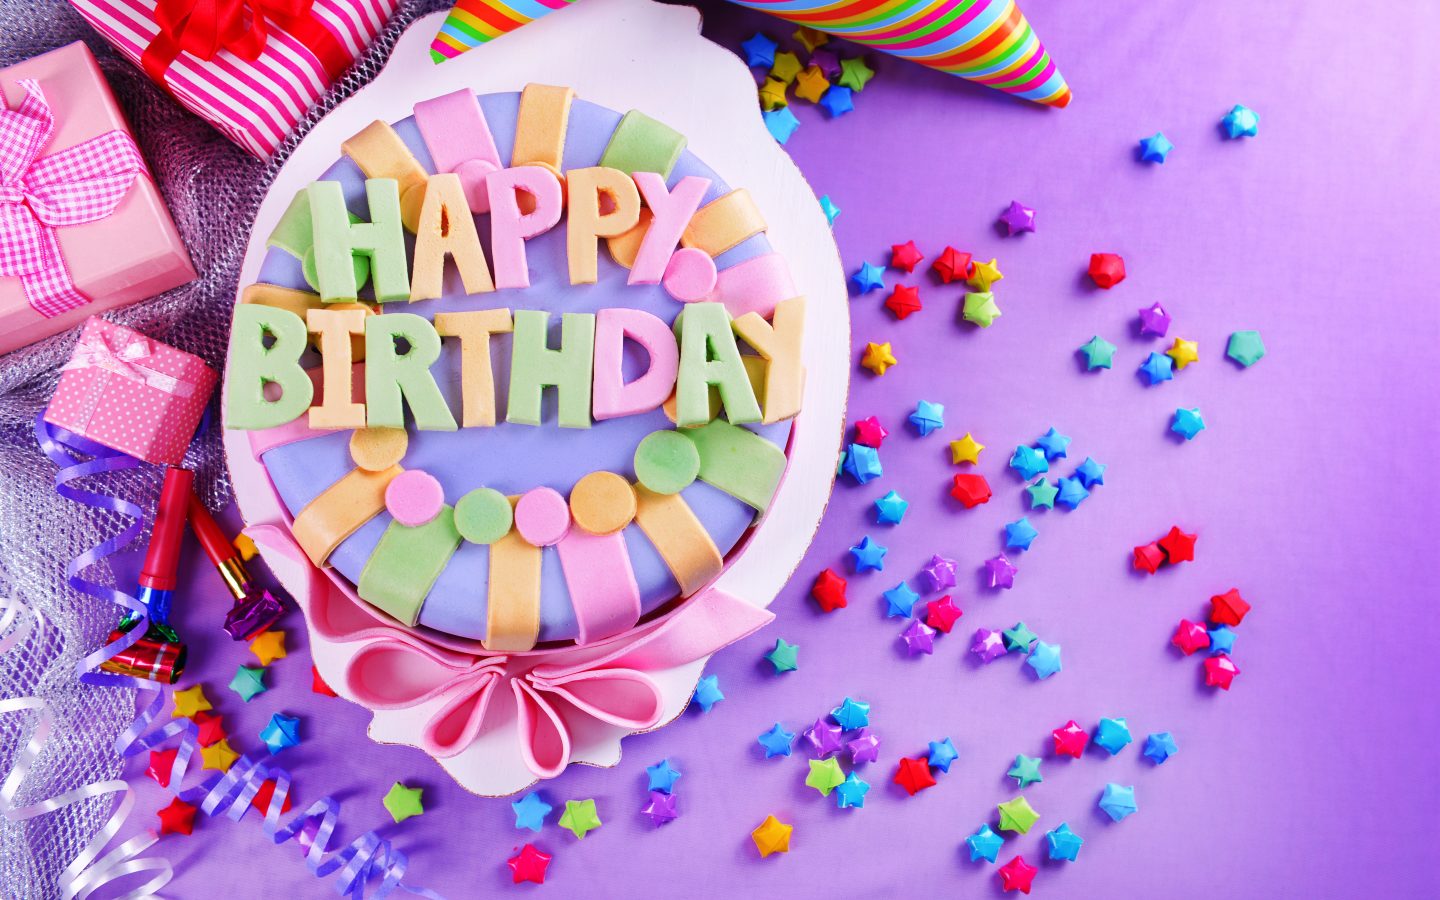 Happy-birthday-Cake-4k-decoration-wallpaper-facebook-photo-1440x900.jpg.